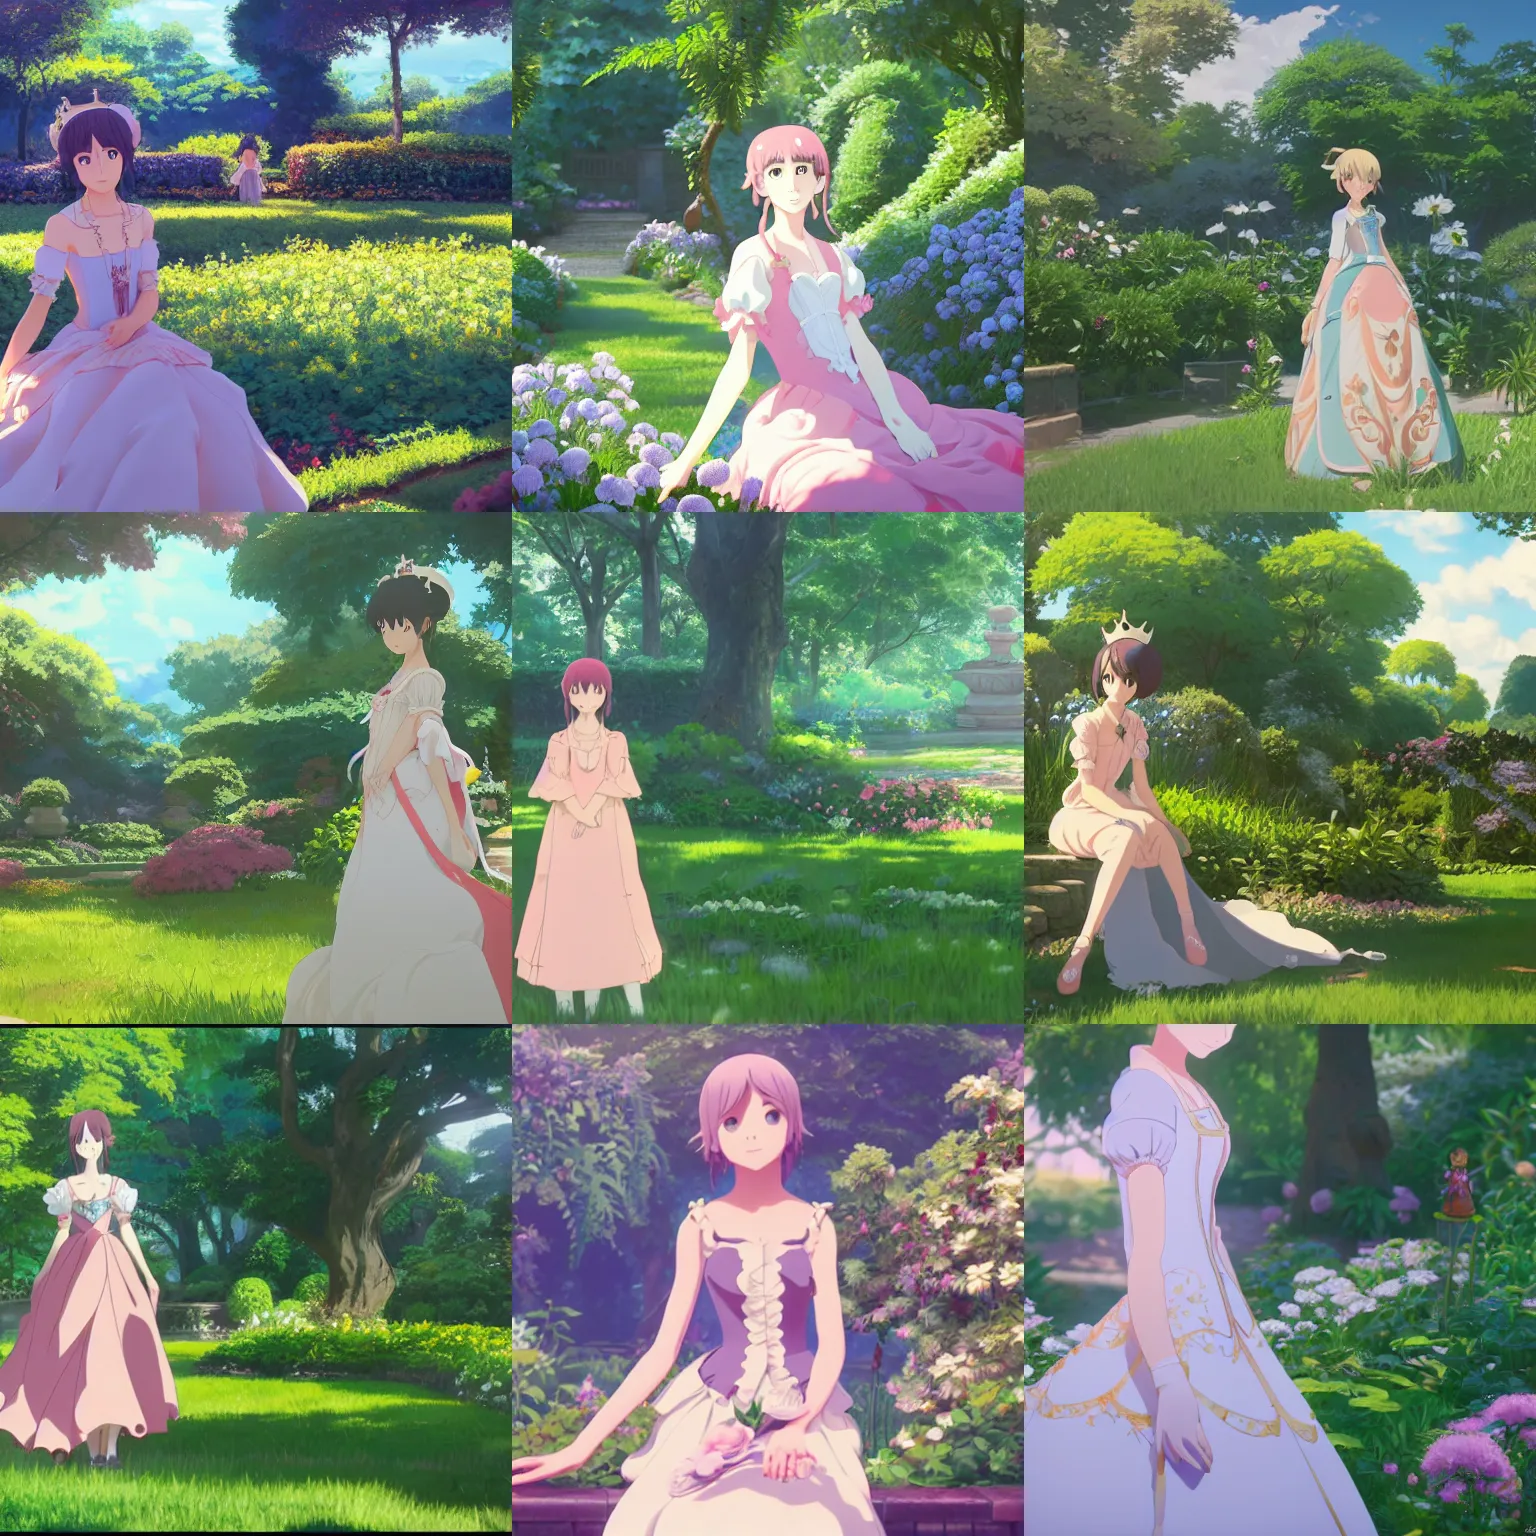 Prompt: character portrait of rococo princess in a garden, by makoto shinkai, 4 k